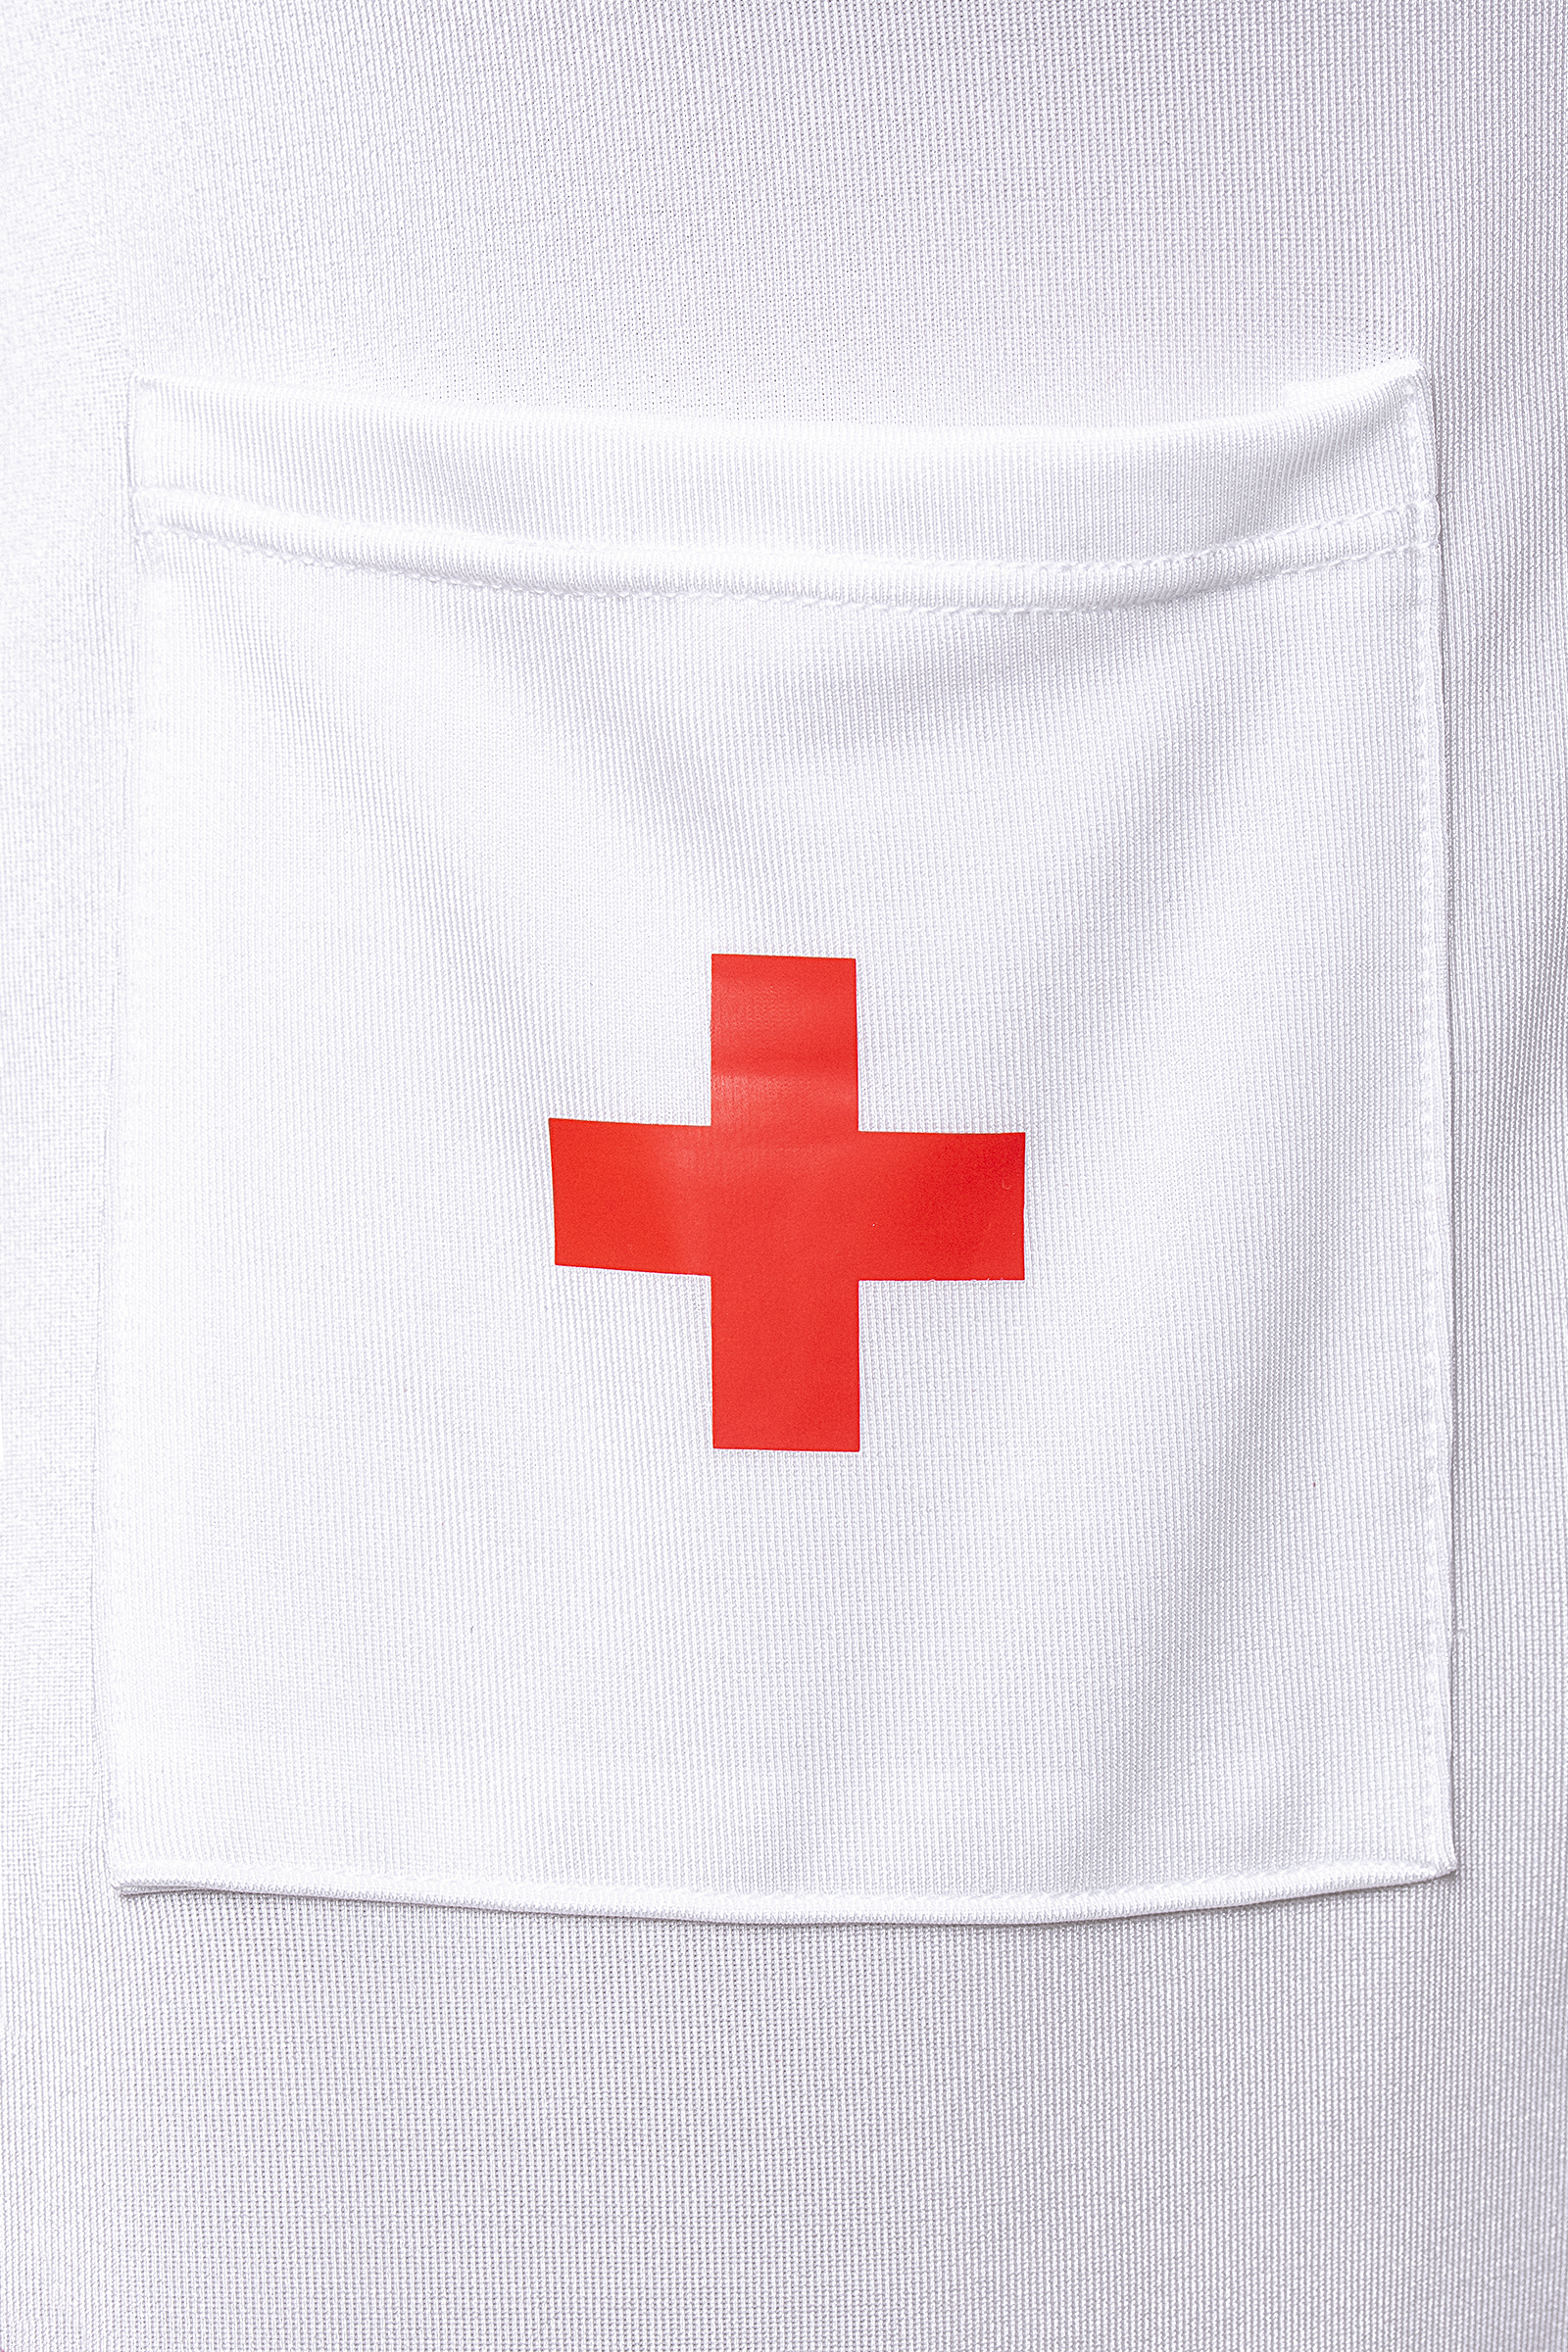 Костюм медсестры Candy Girl Leann (топ, стринги, чулки), бело-красный, OS. Фото N7